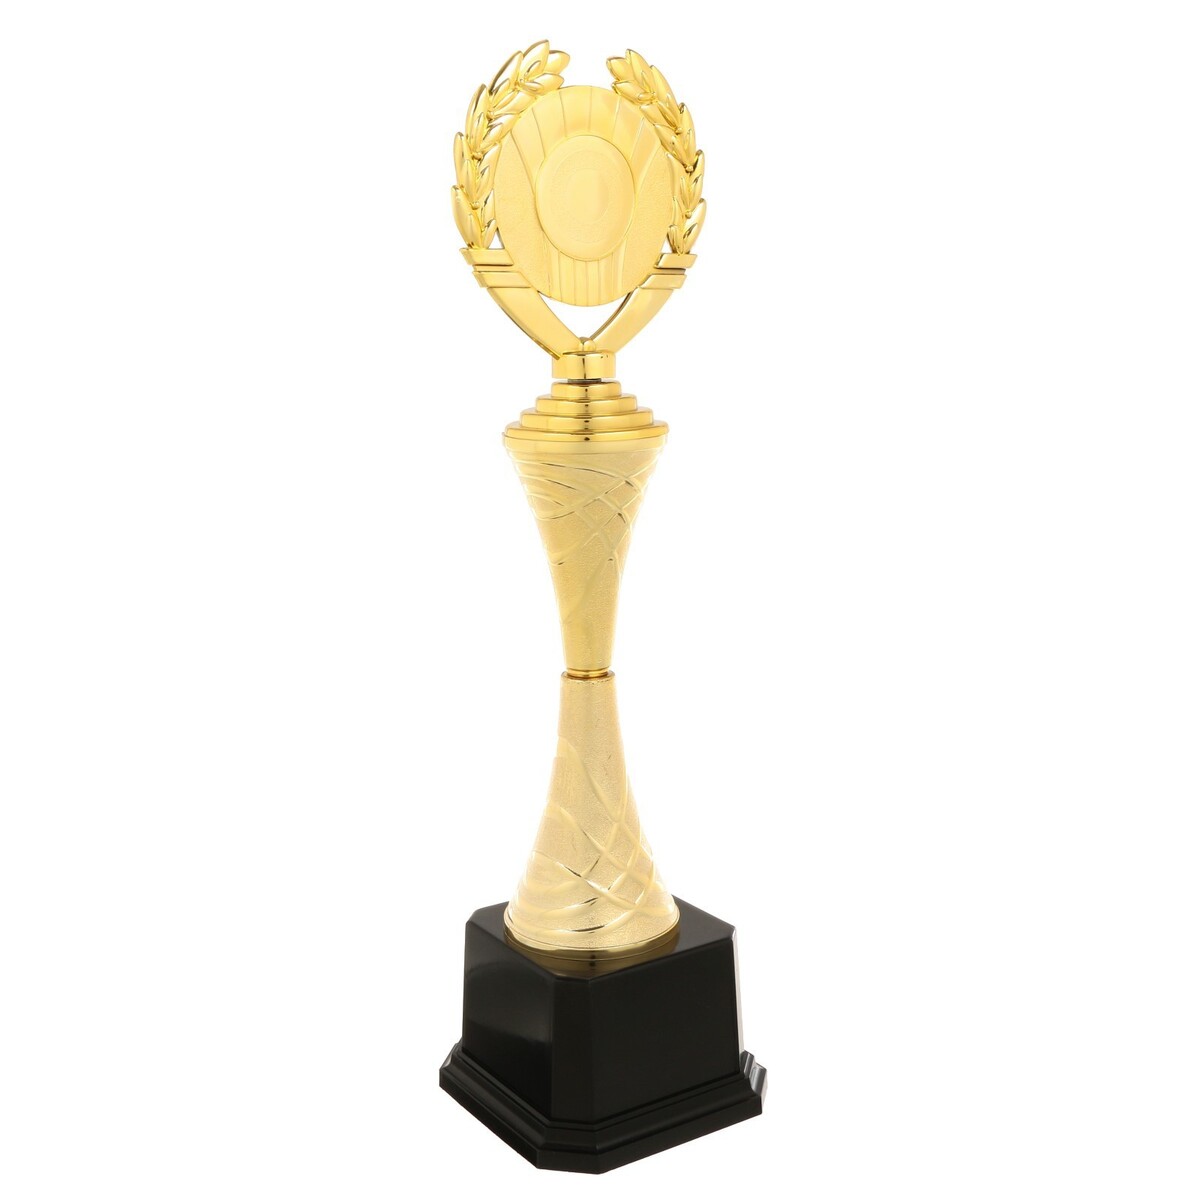 Кубок 178b, наградная фигура, золото, подставка пластик, 45 × 12,5 × 11 см.